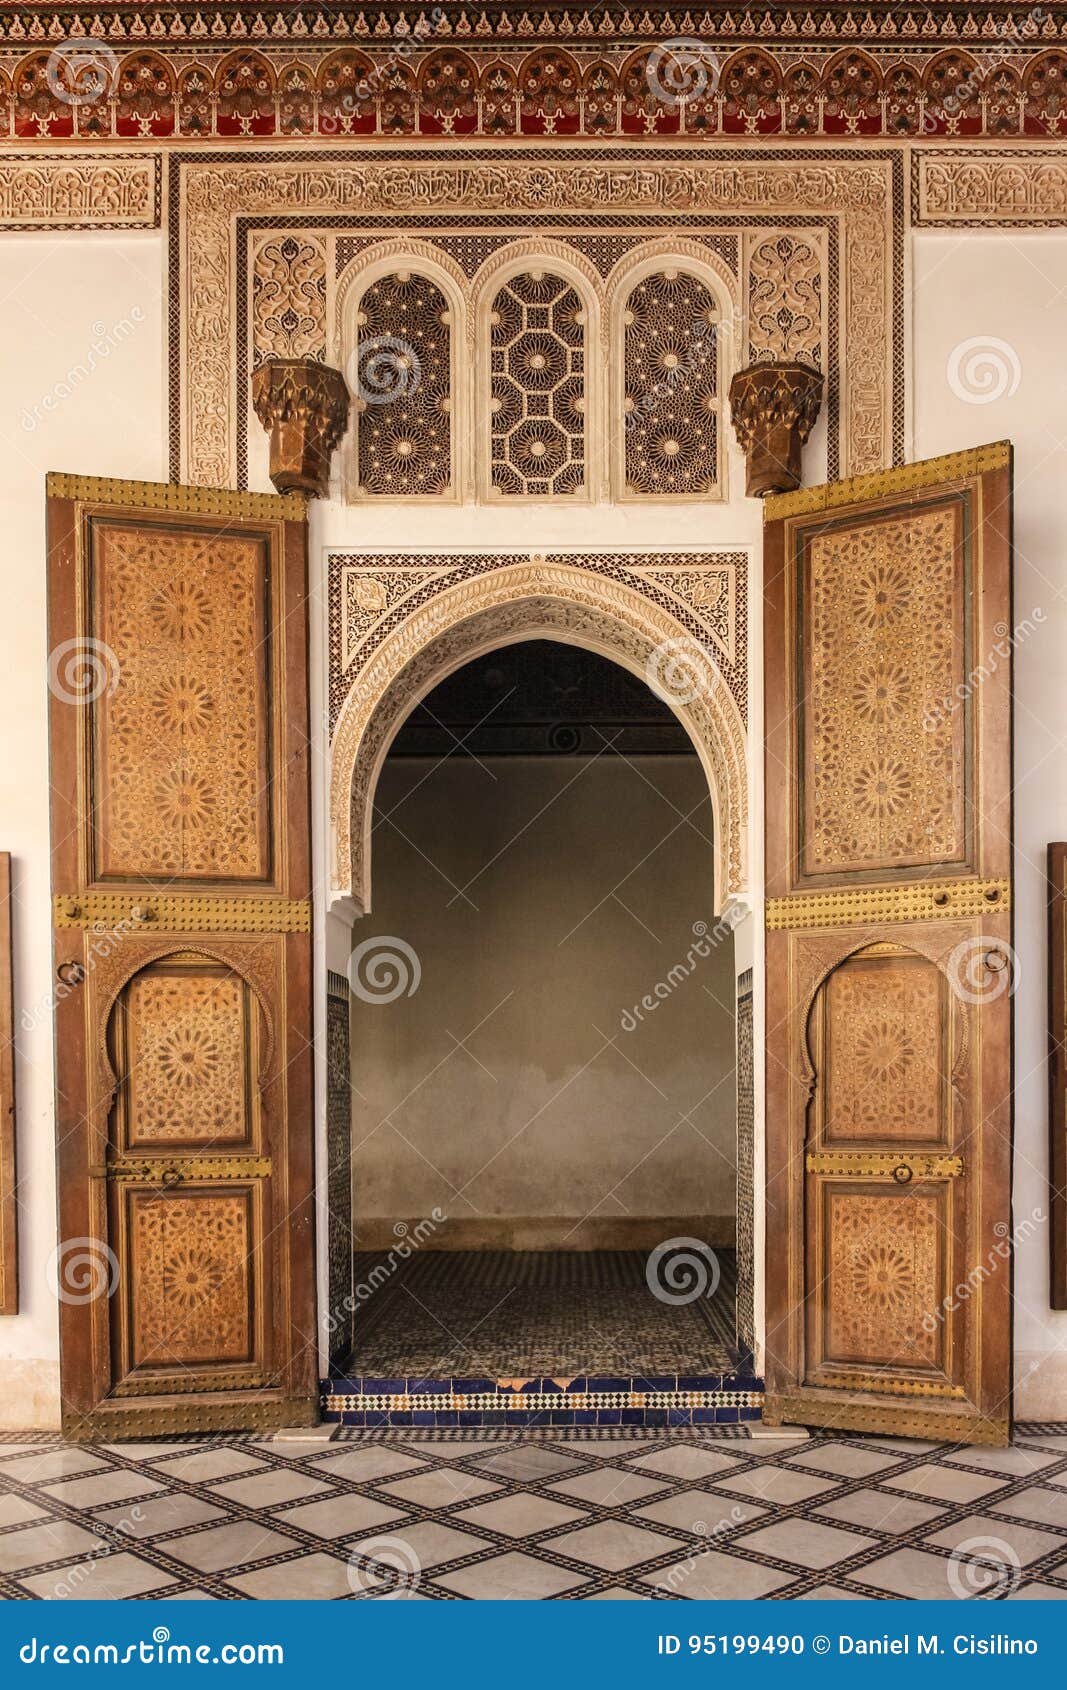 bahia palace. interior. marrakesh . morocco